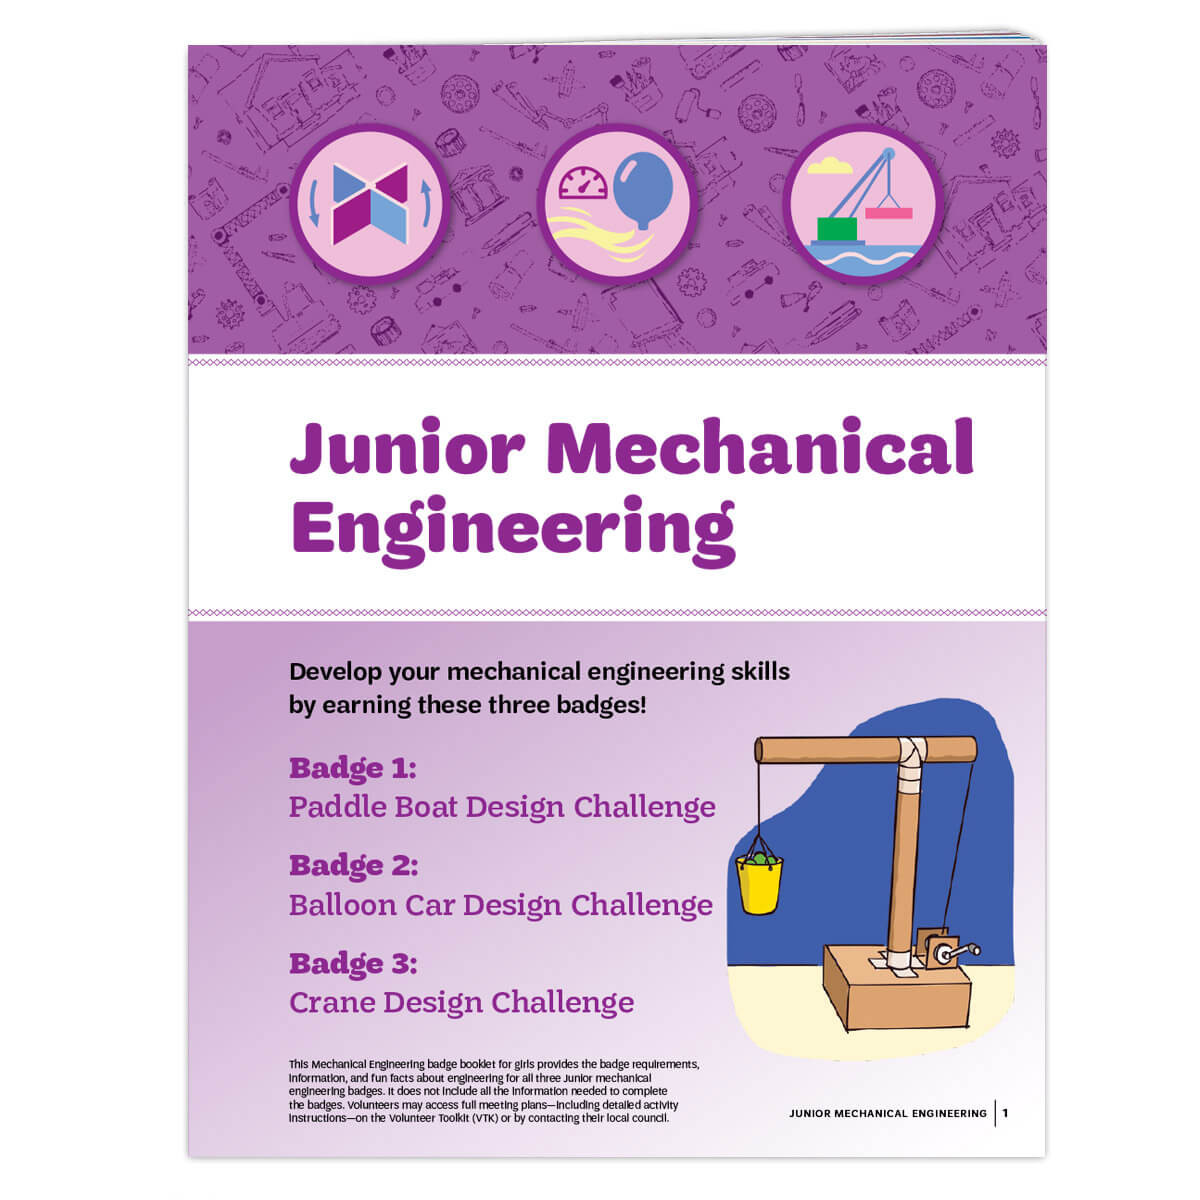 Jr. Mechanical Engineering REQ